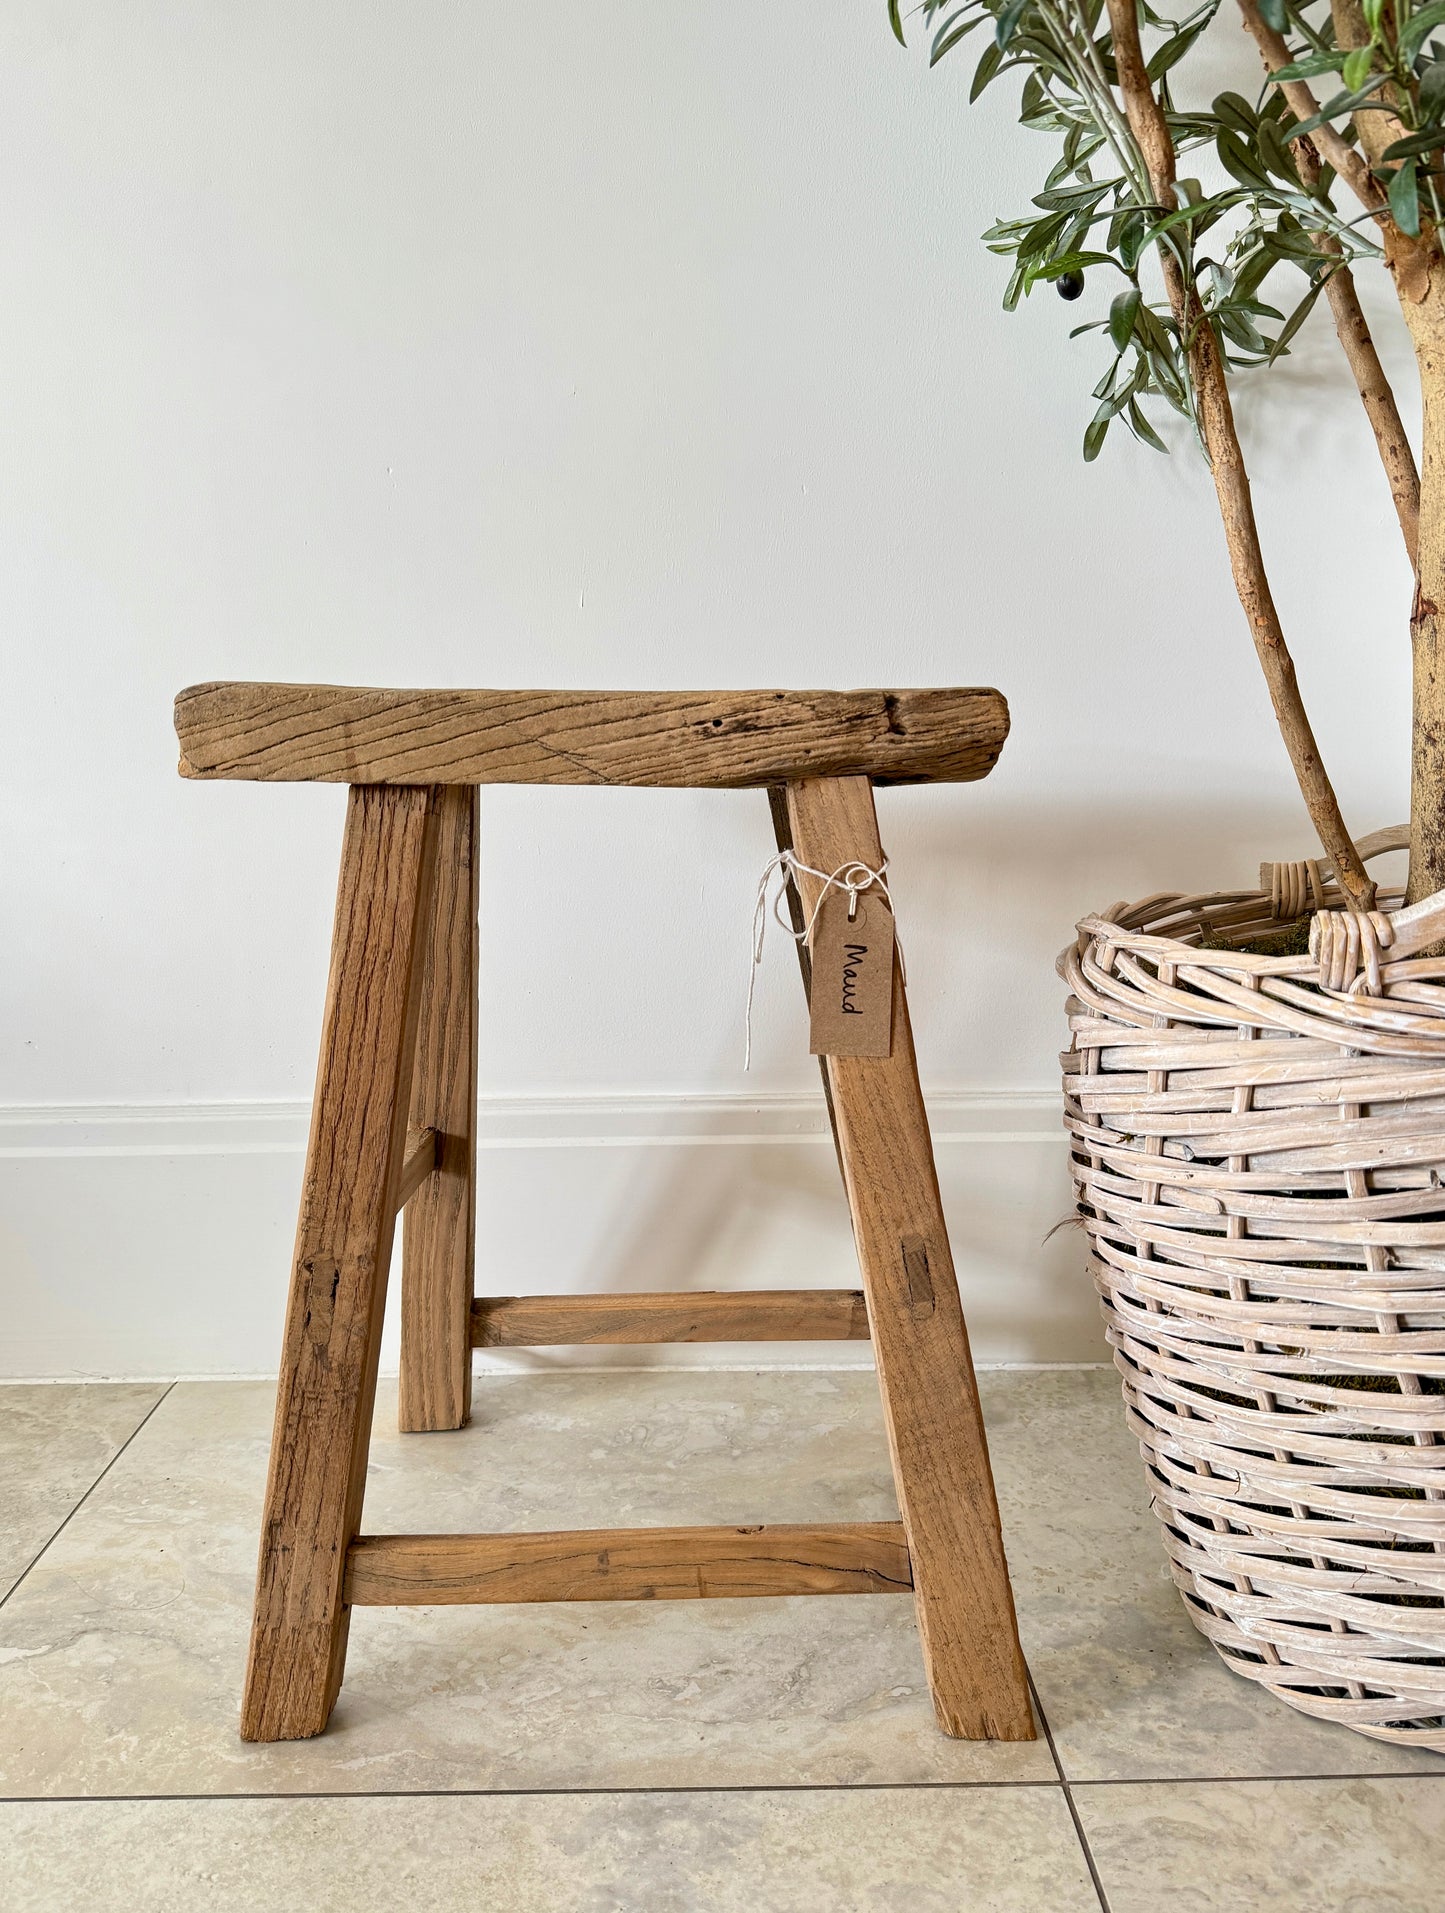 Rustic elm stools